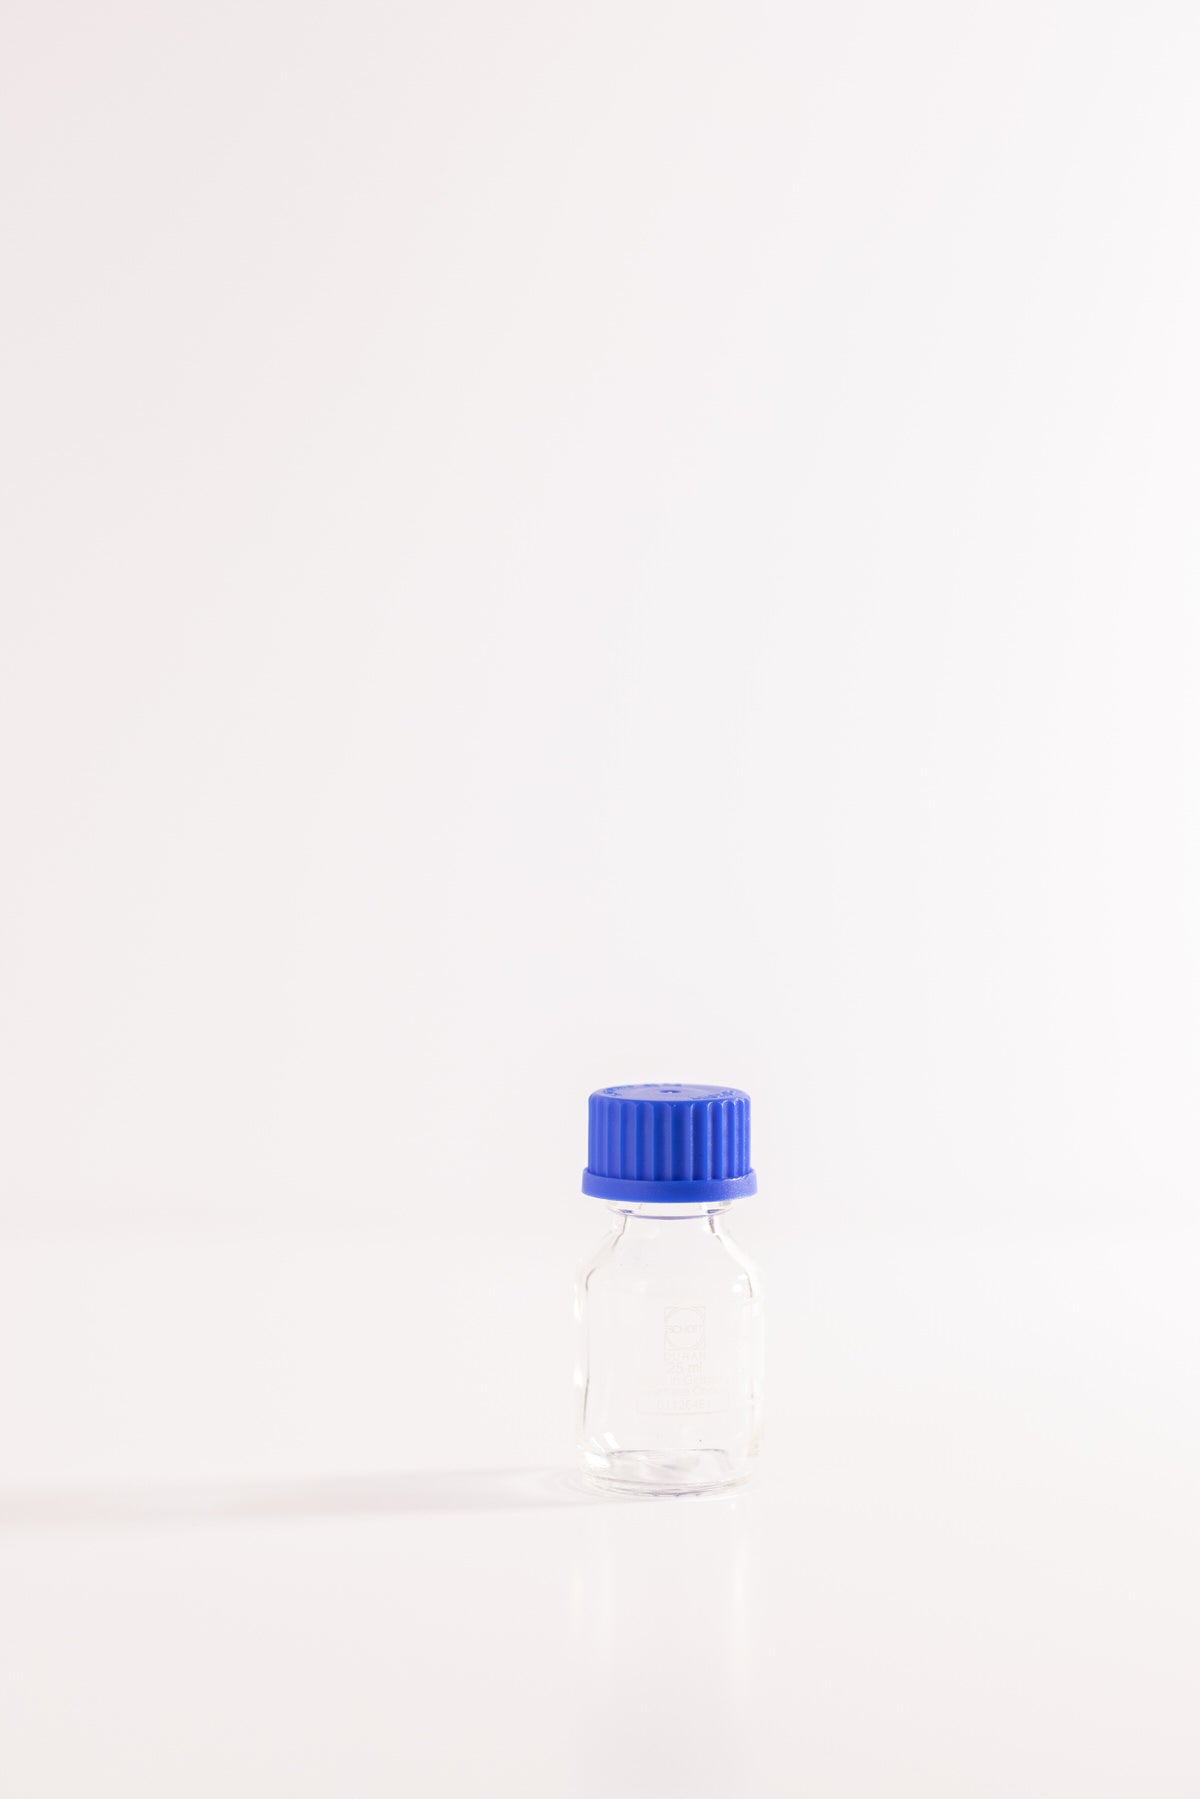 Schott Duran , Laboratory Bottle 25ml with GL45 Screw Cap Air Tight Seal